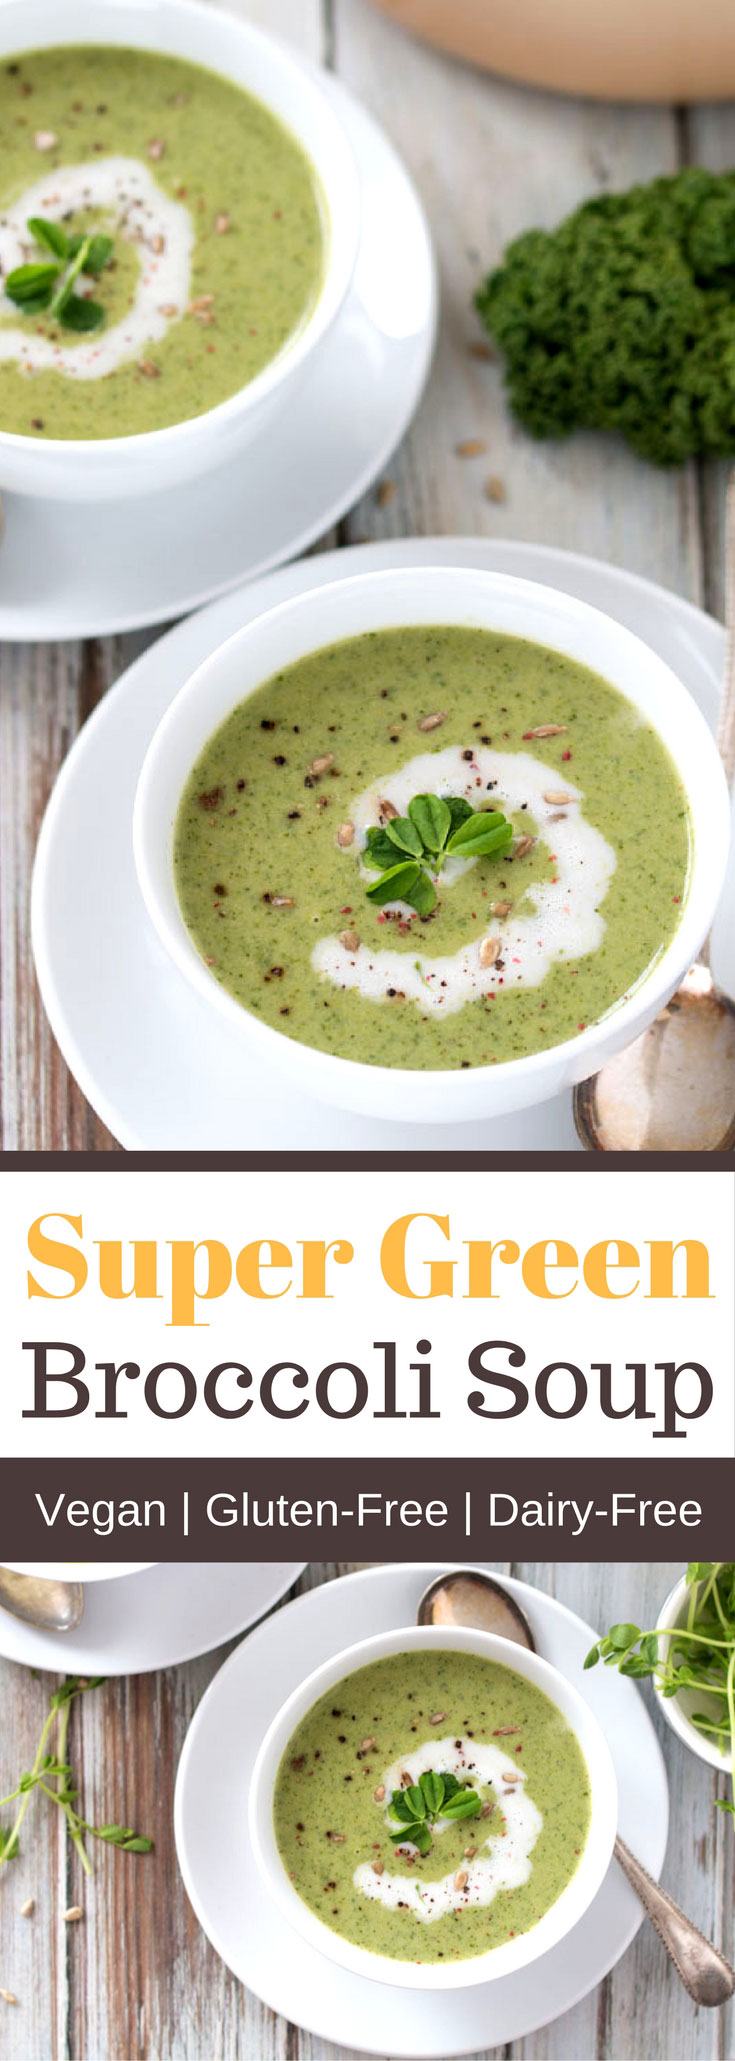 Super Green Broccoli Soup